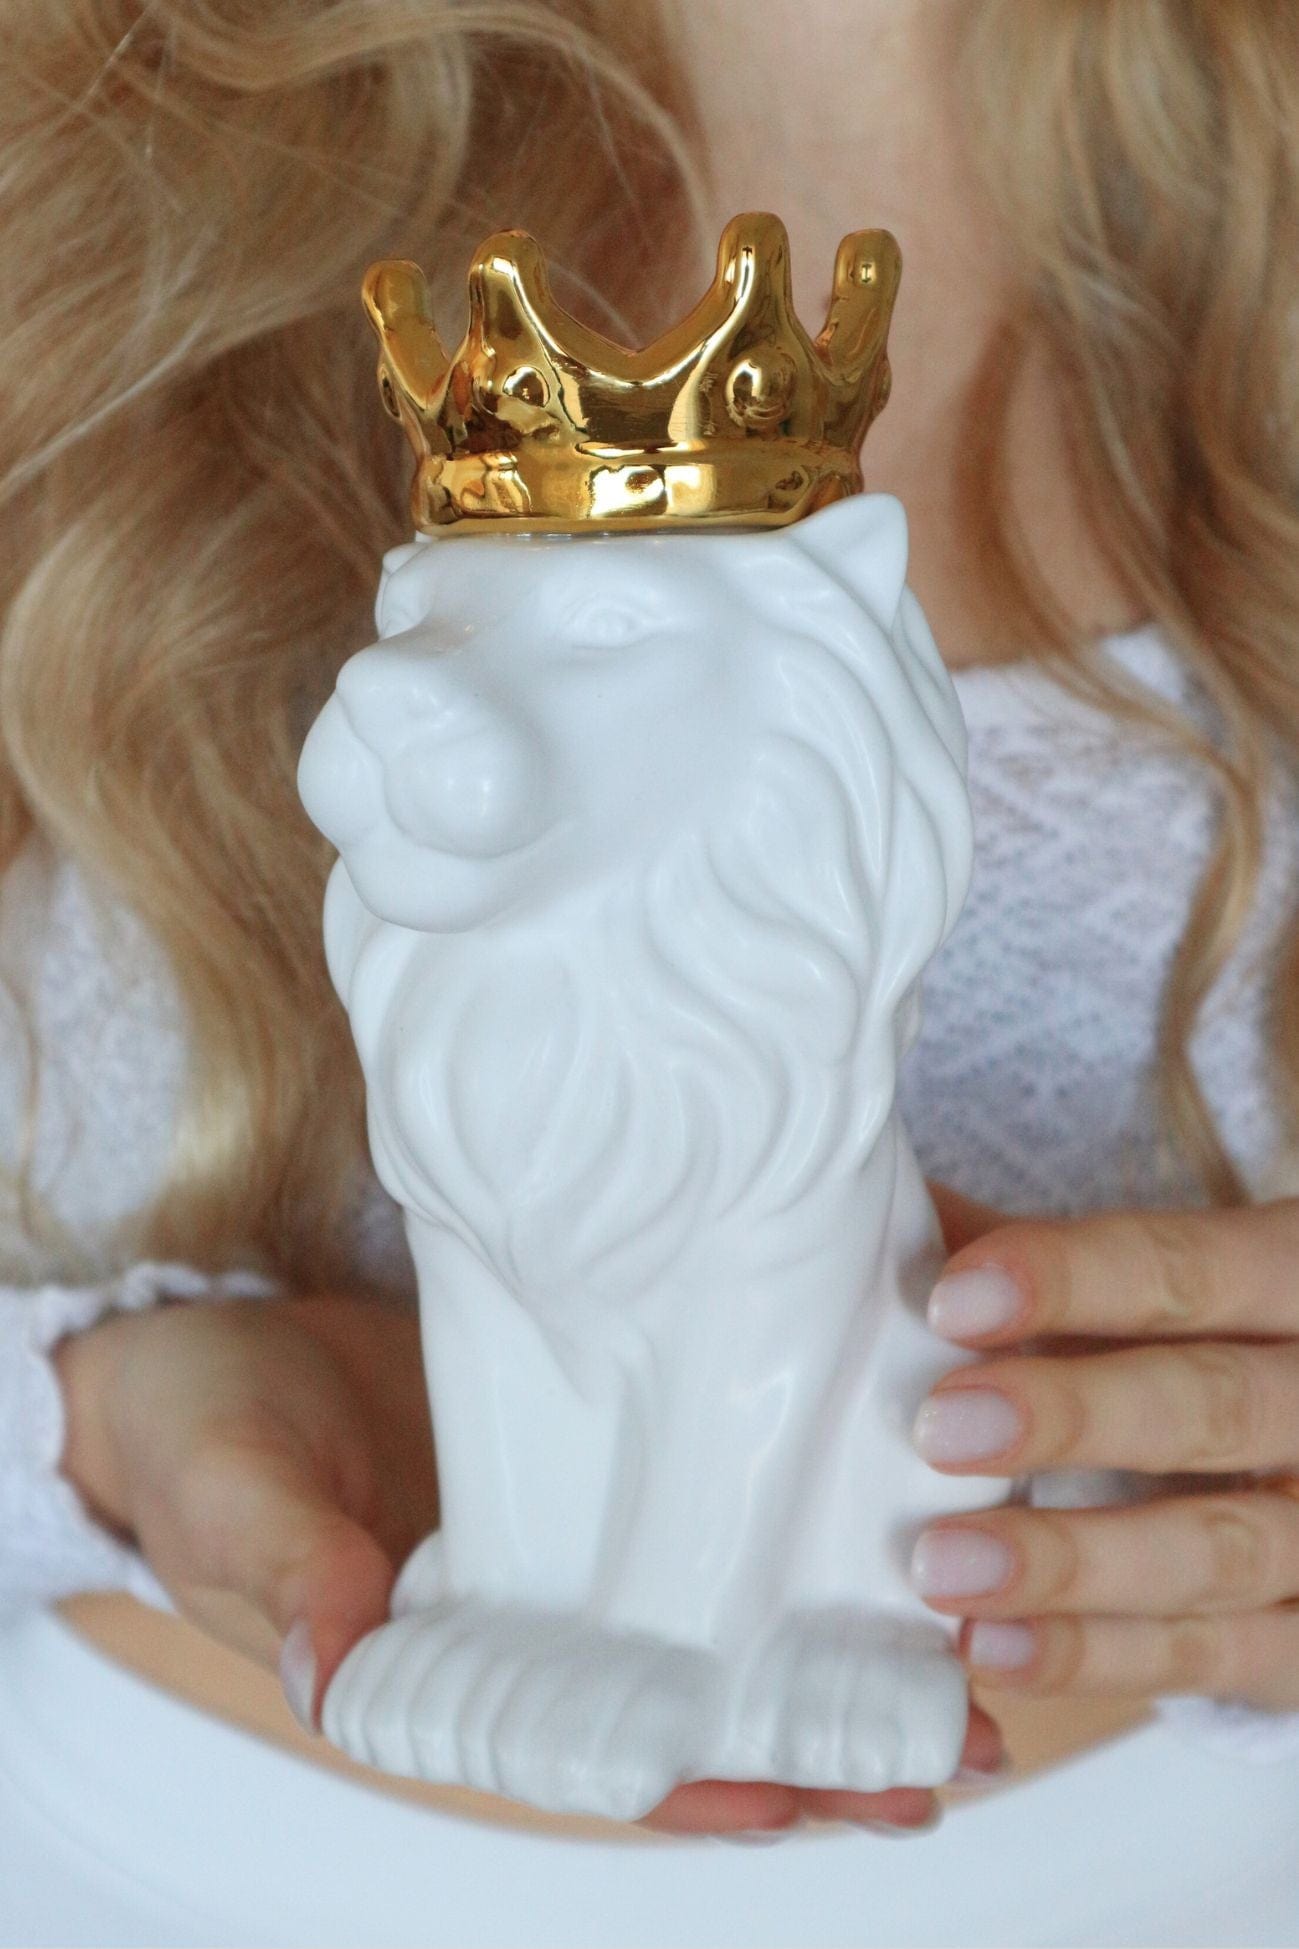 Item International King King - Vaso a forma di leone in porcellana bianca | Item International